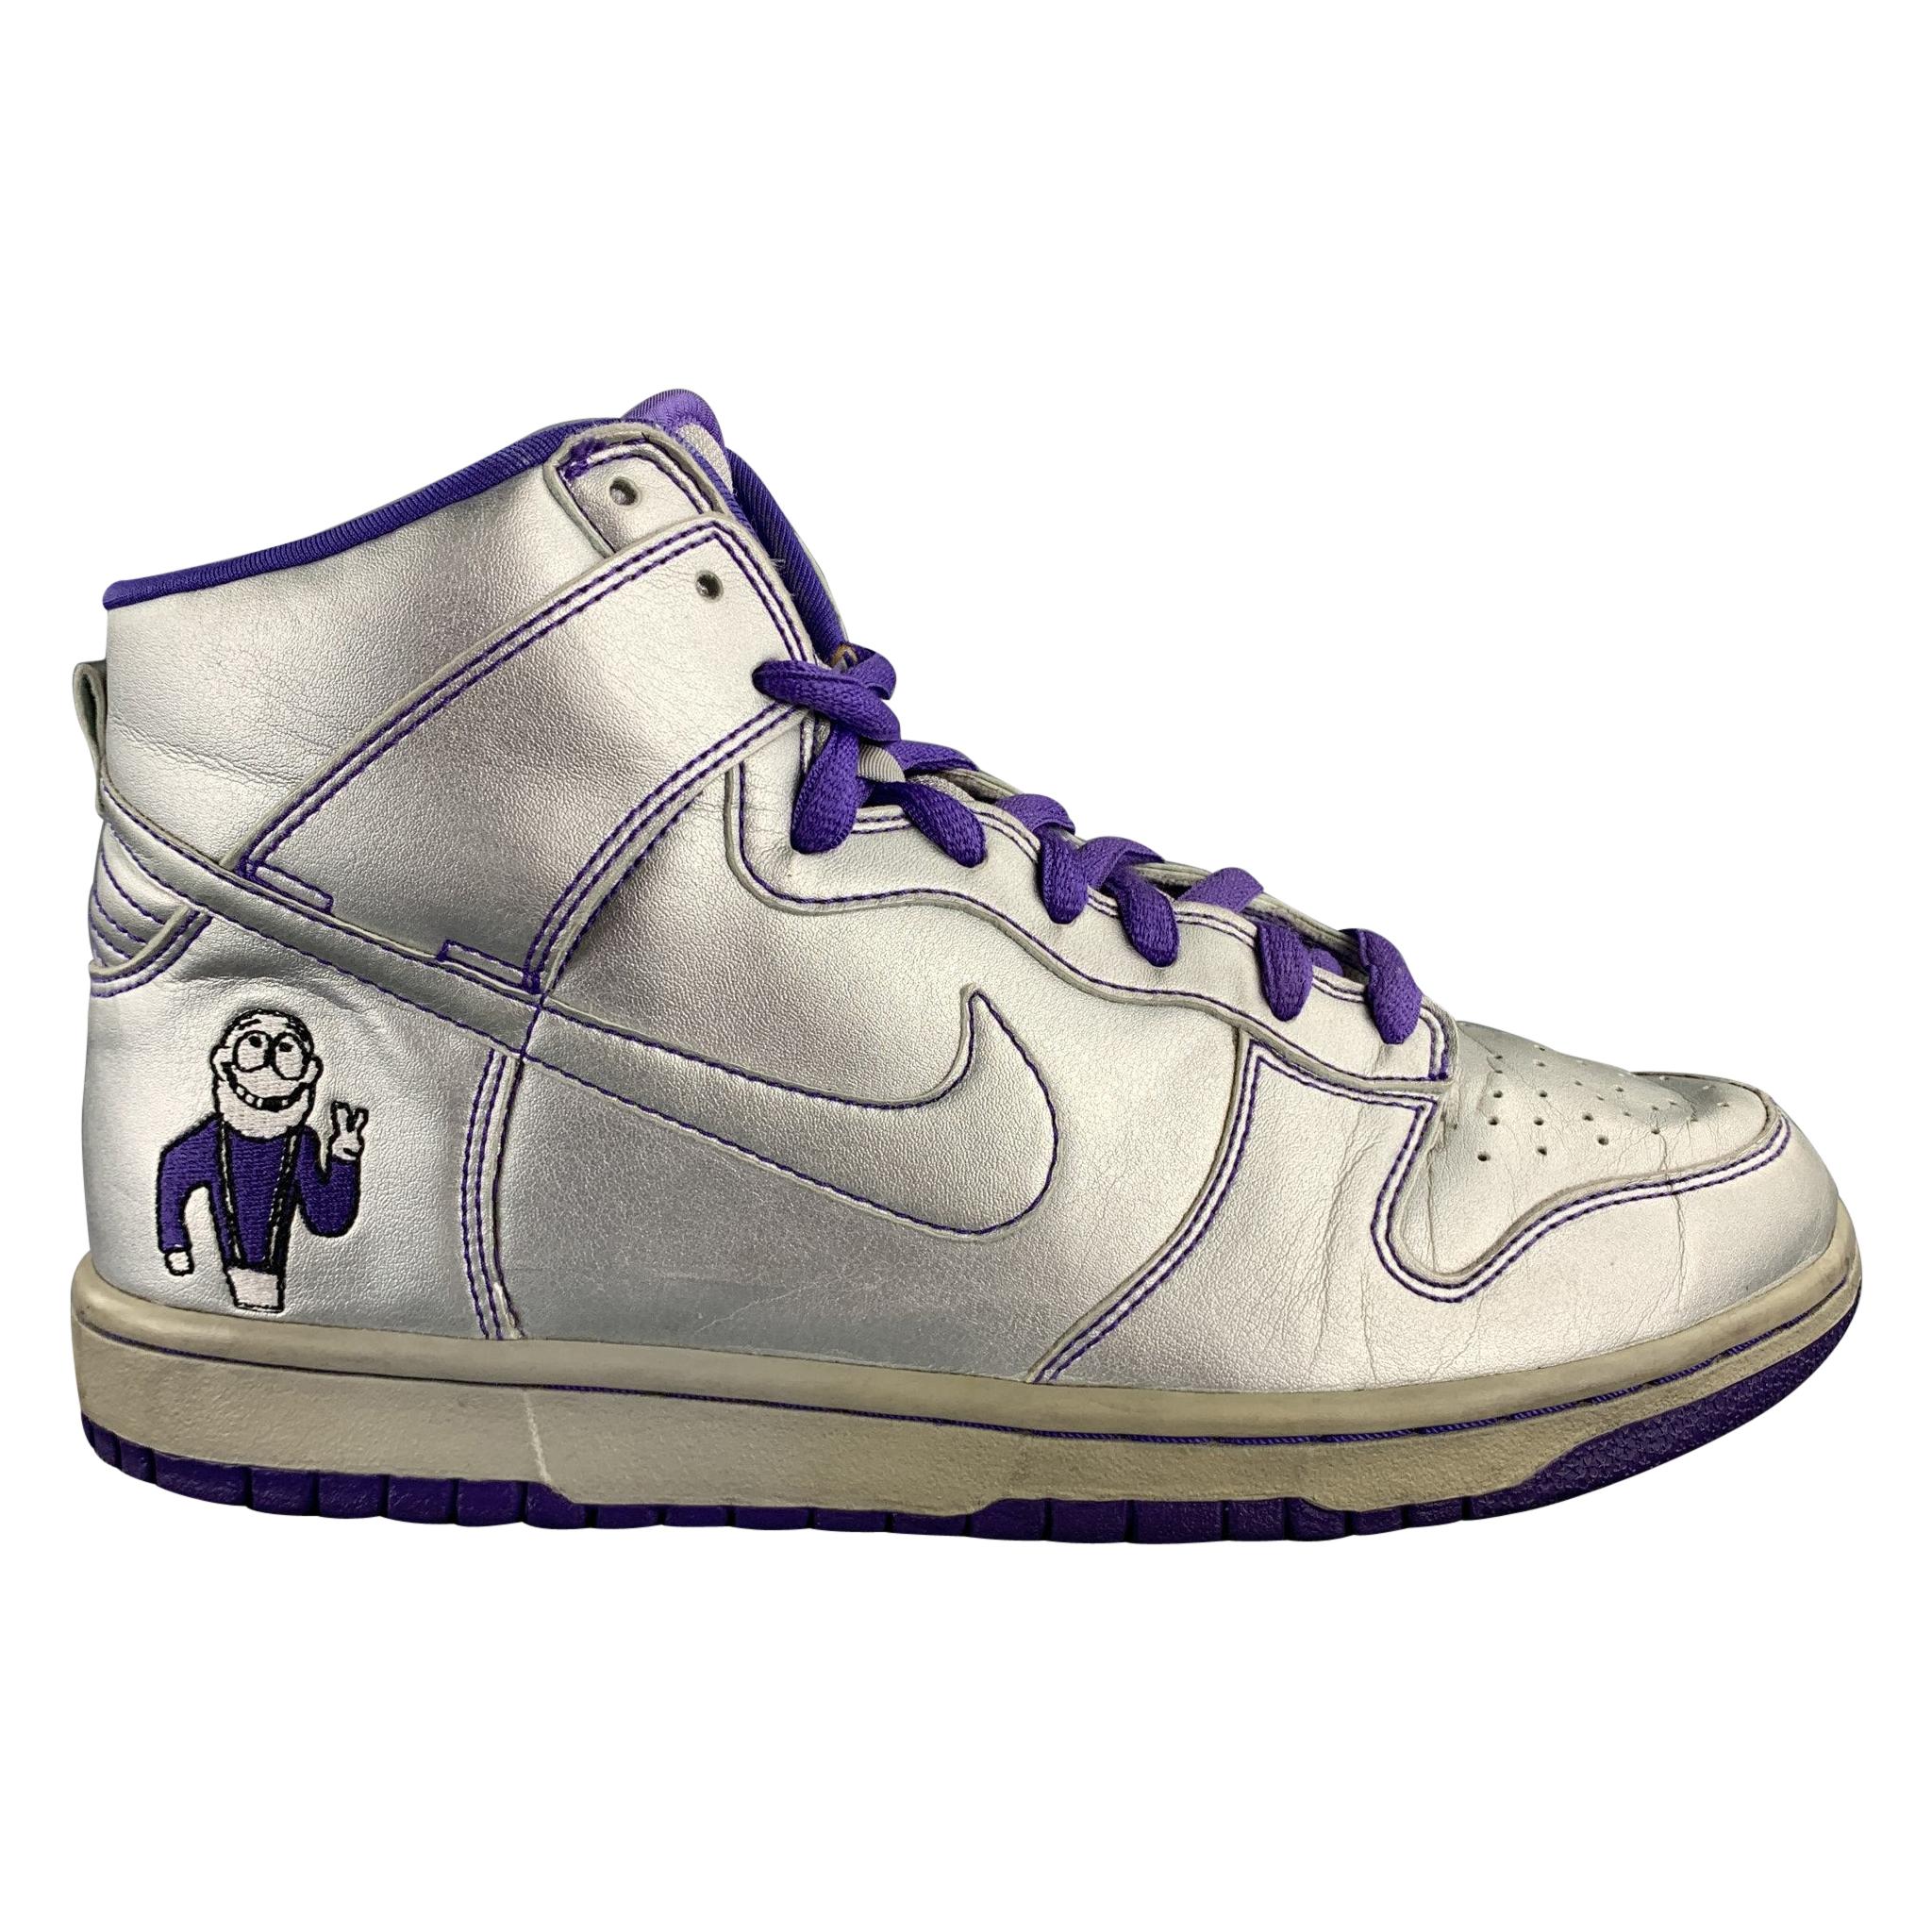 NIKE SB "Dinosaur Jr." Size 8.5 Silver & Purple Metallic Leather Sneakers